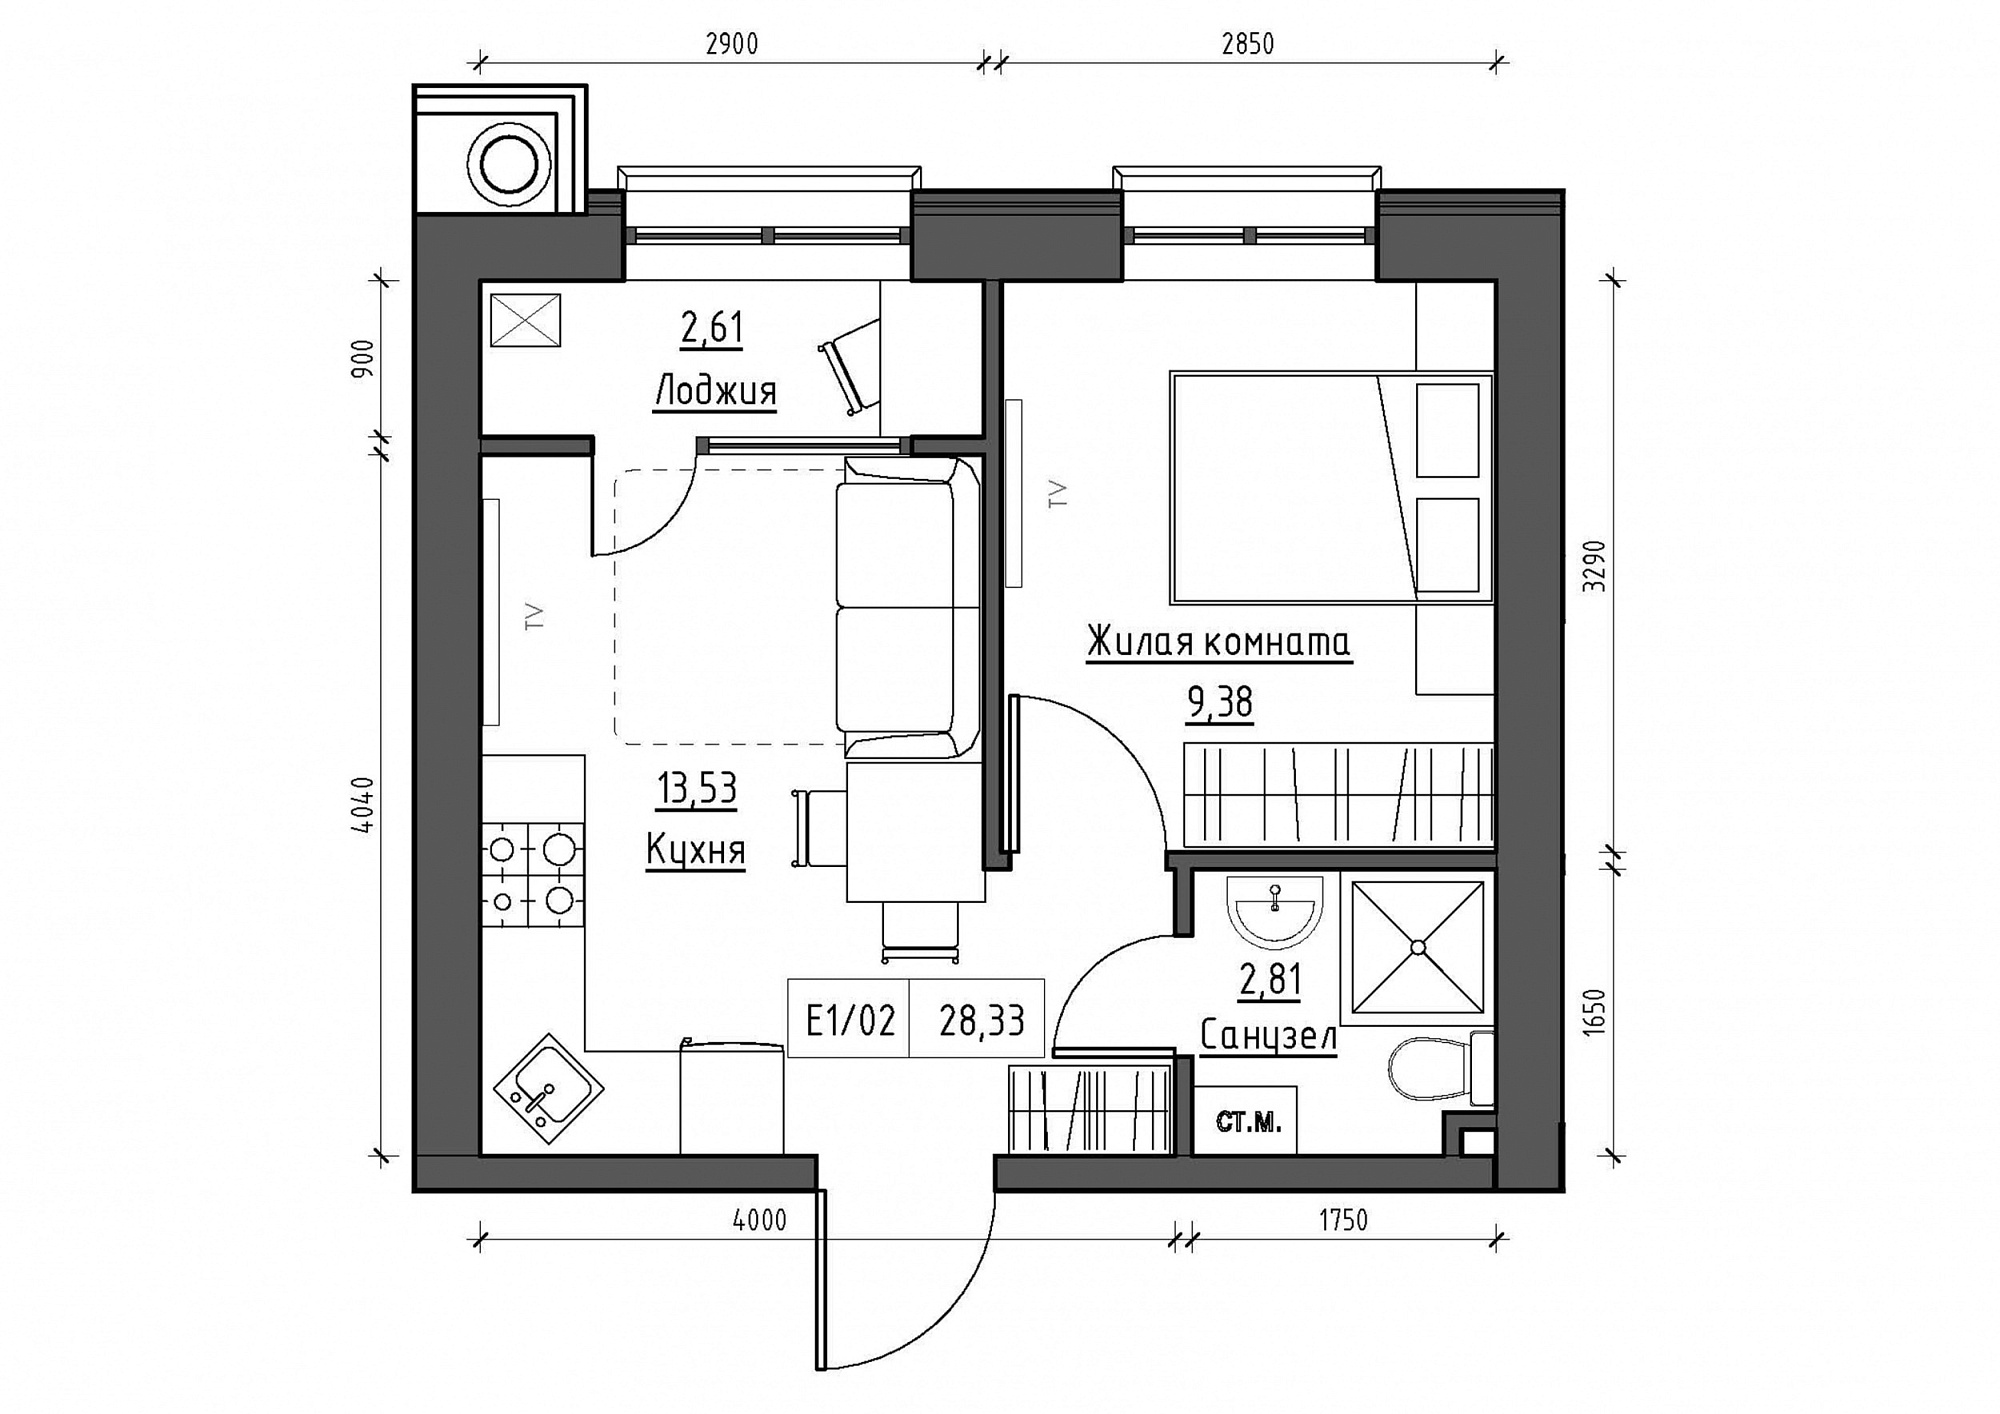 Planning 1-rm flats area 28.33m2, KS-011-03/0015.